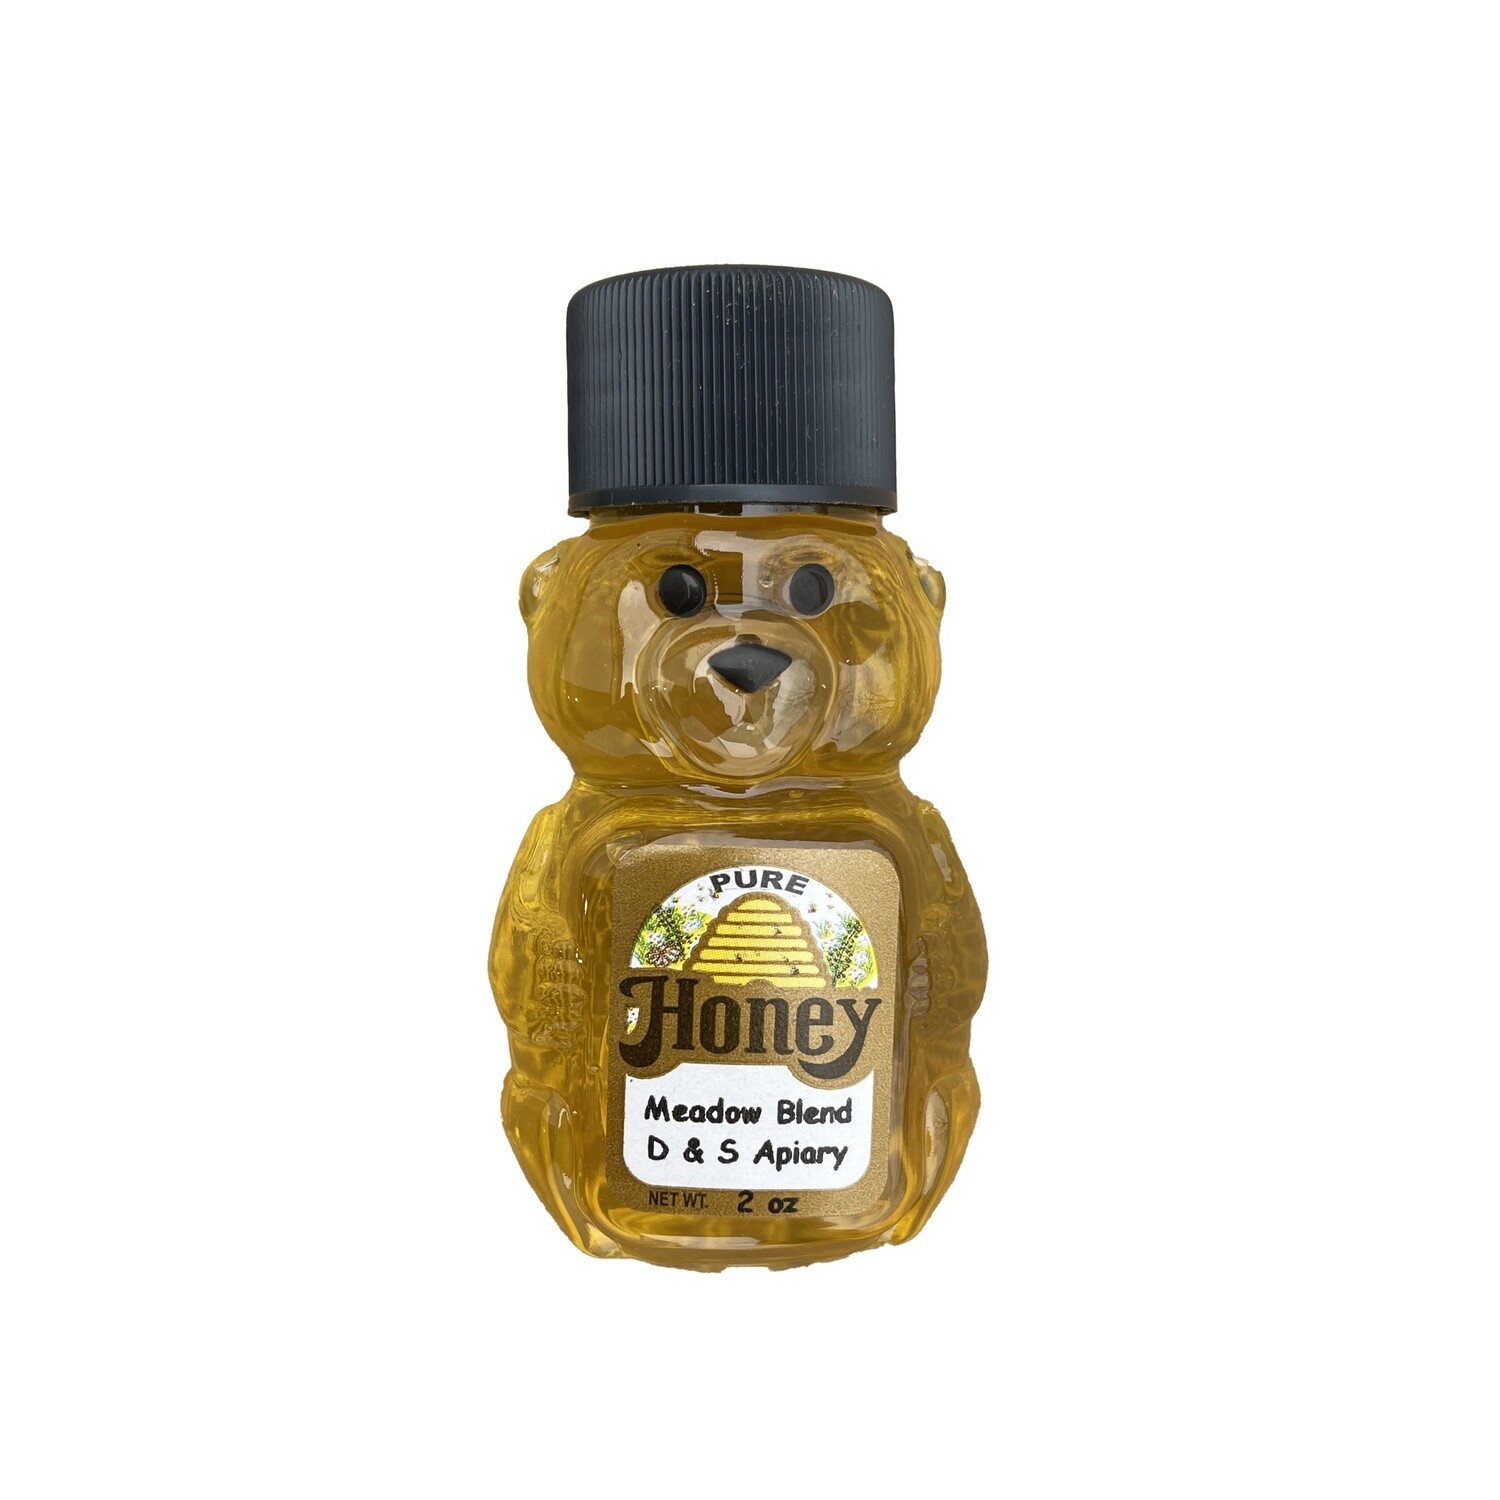 Meadow Blend Honey Bear Sampler 2 oz